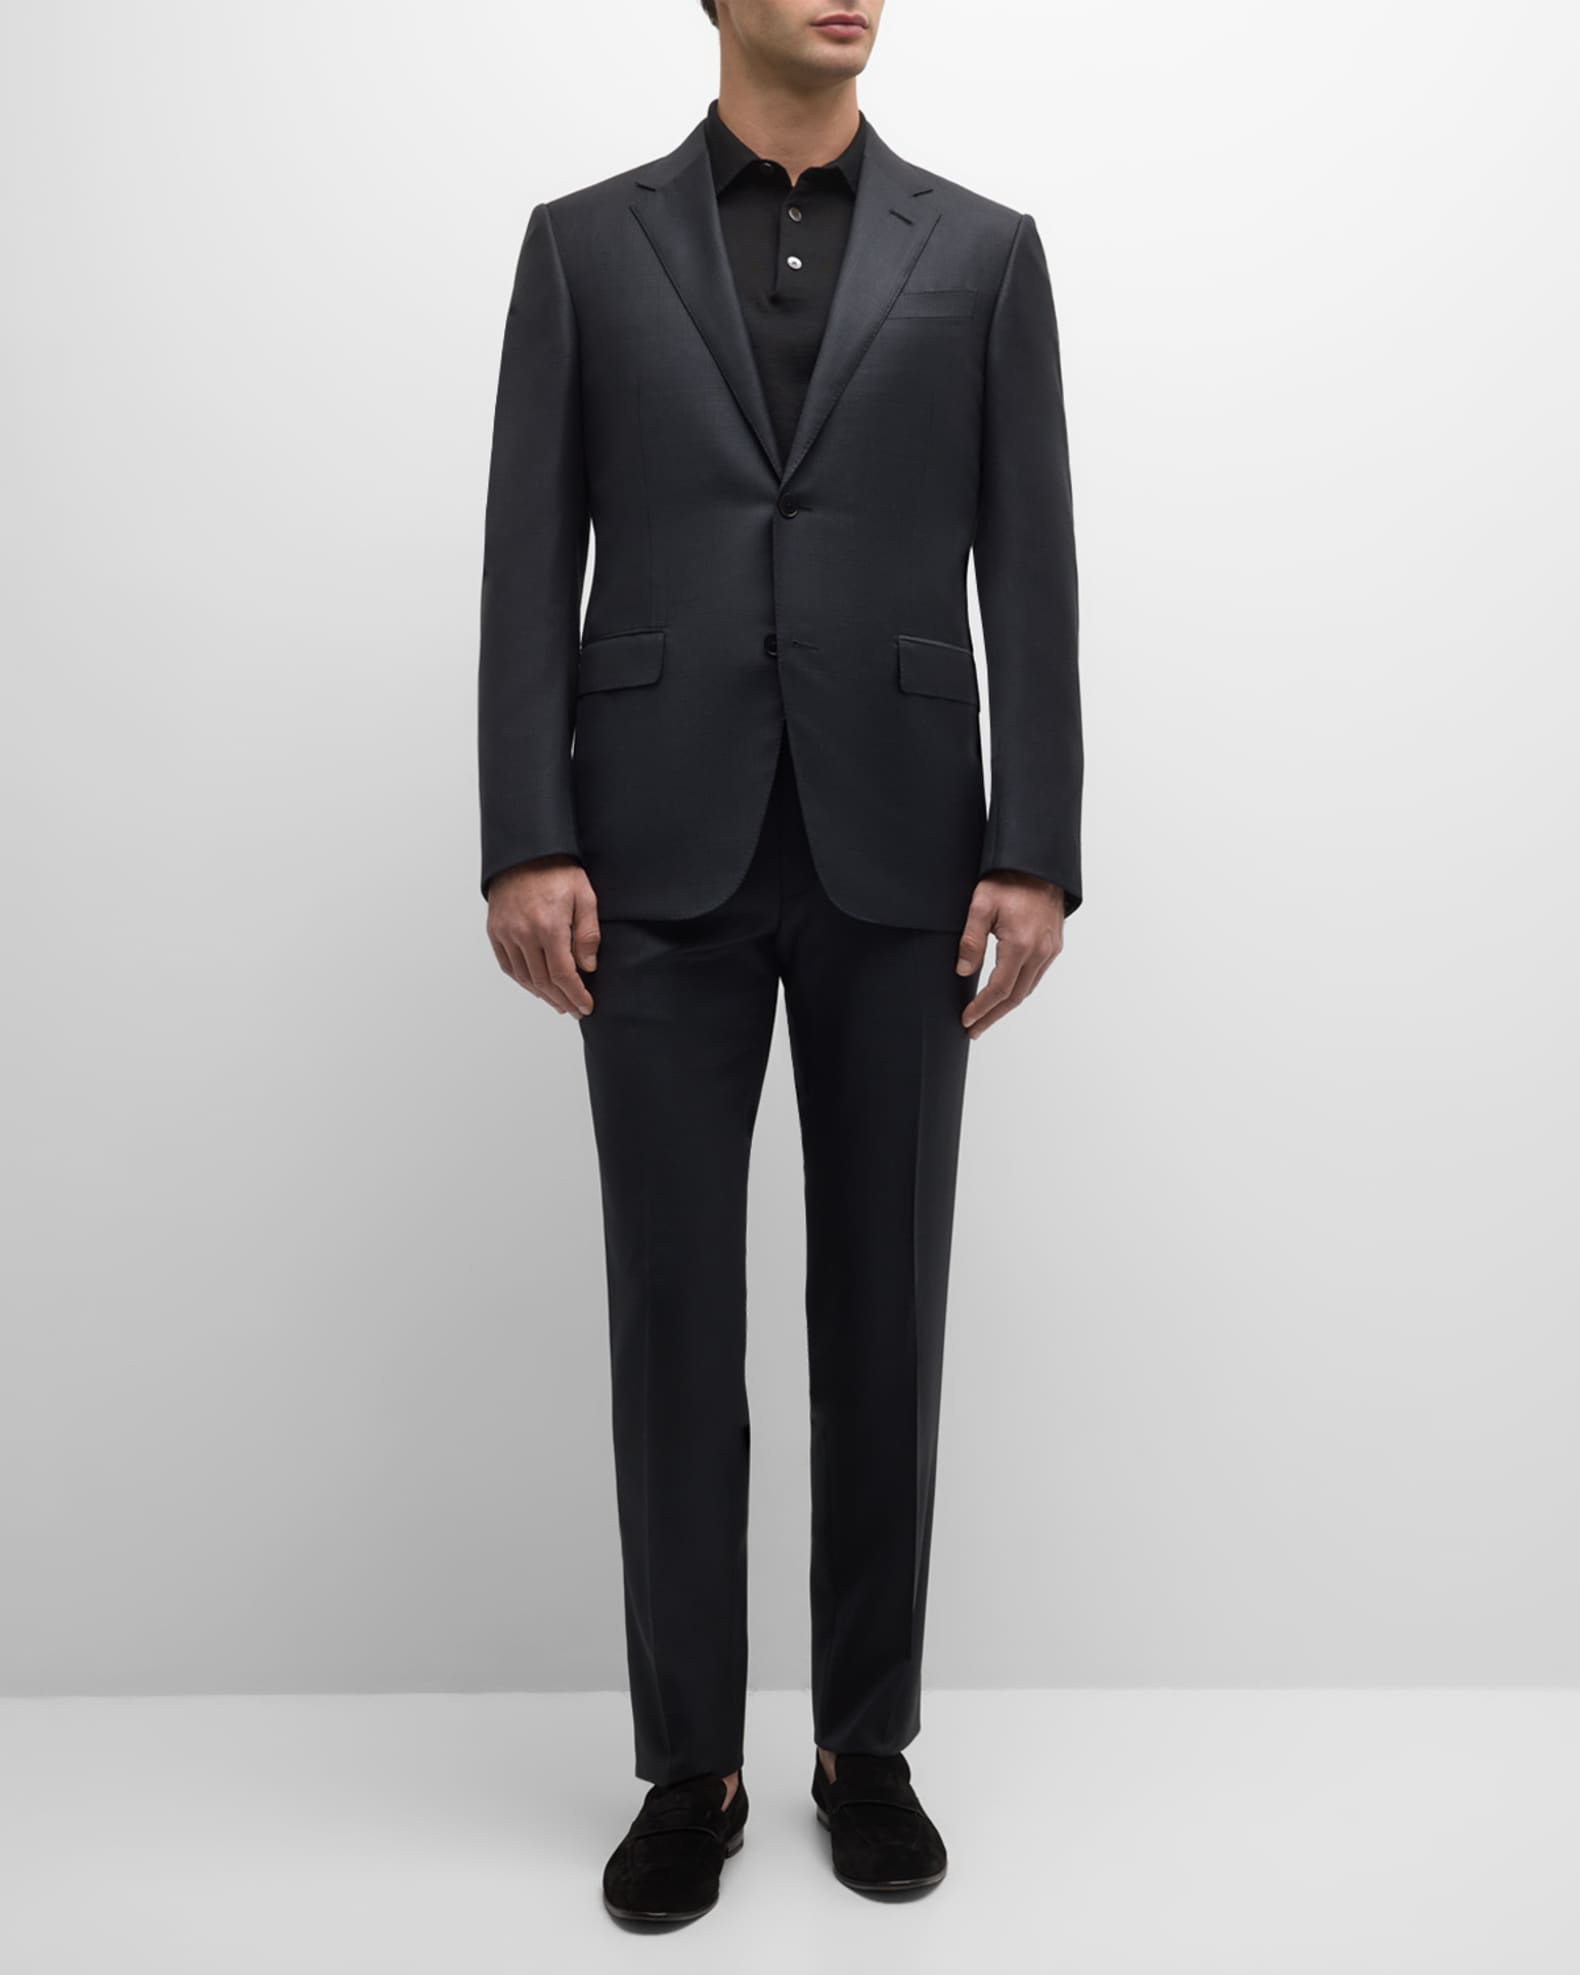 ZEGNA Men's Tonal Plaid Wool Suit | Neiman Marcus